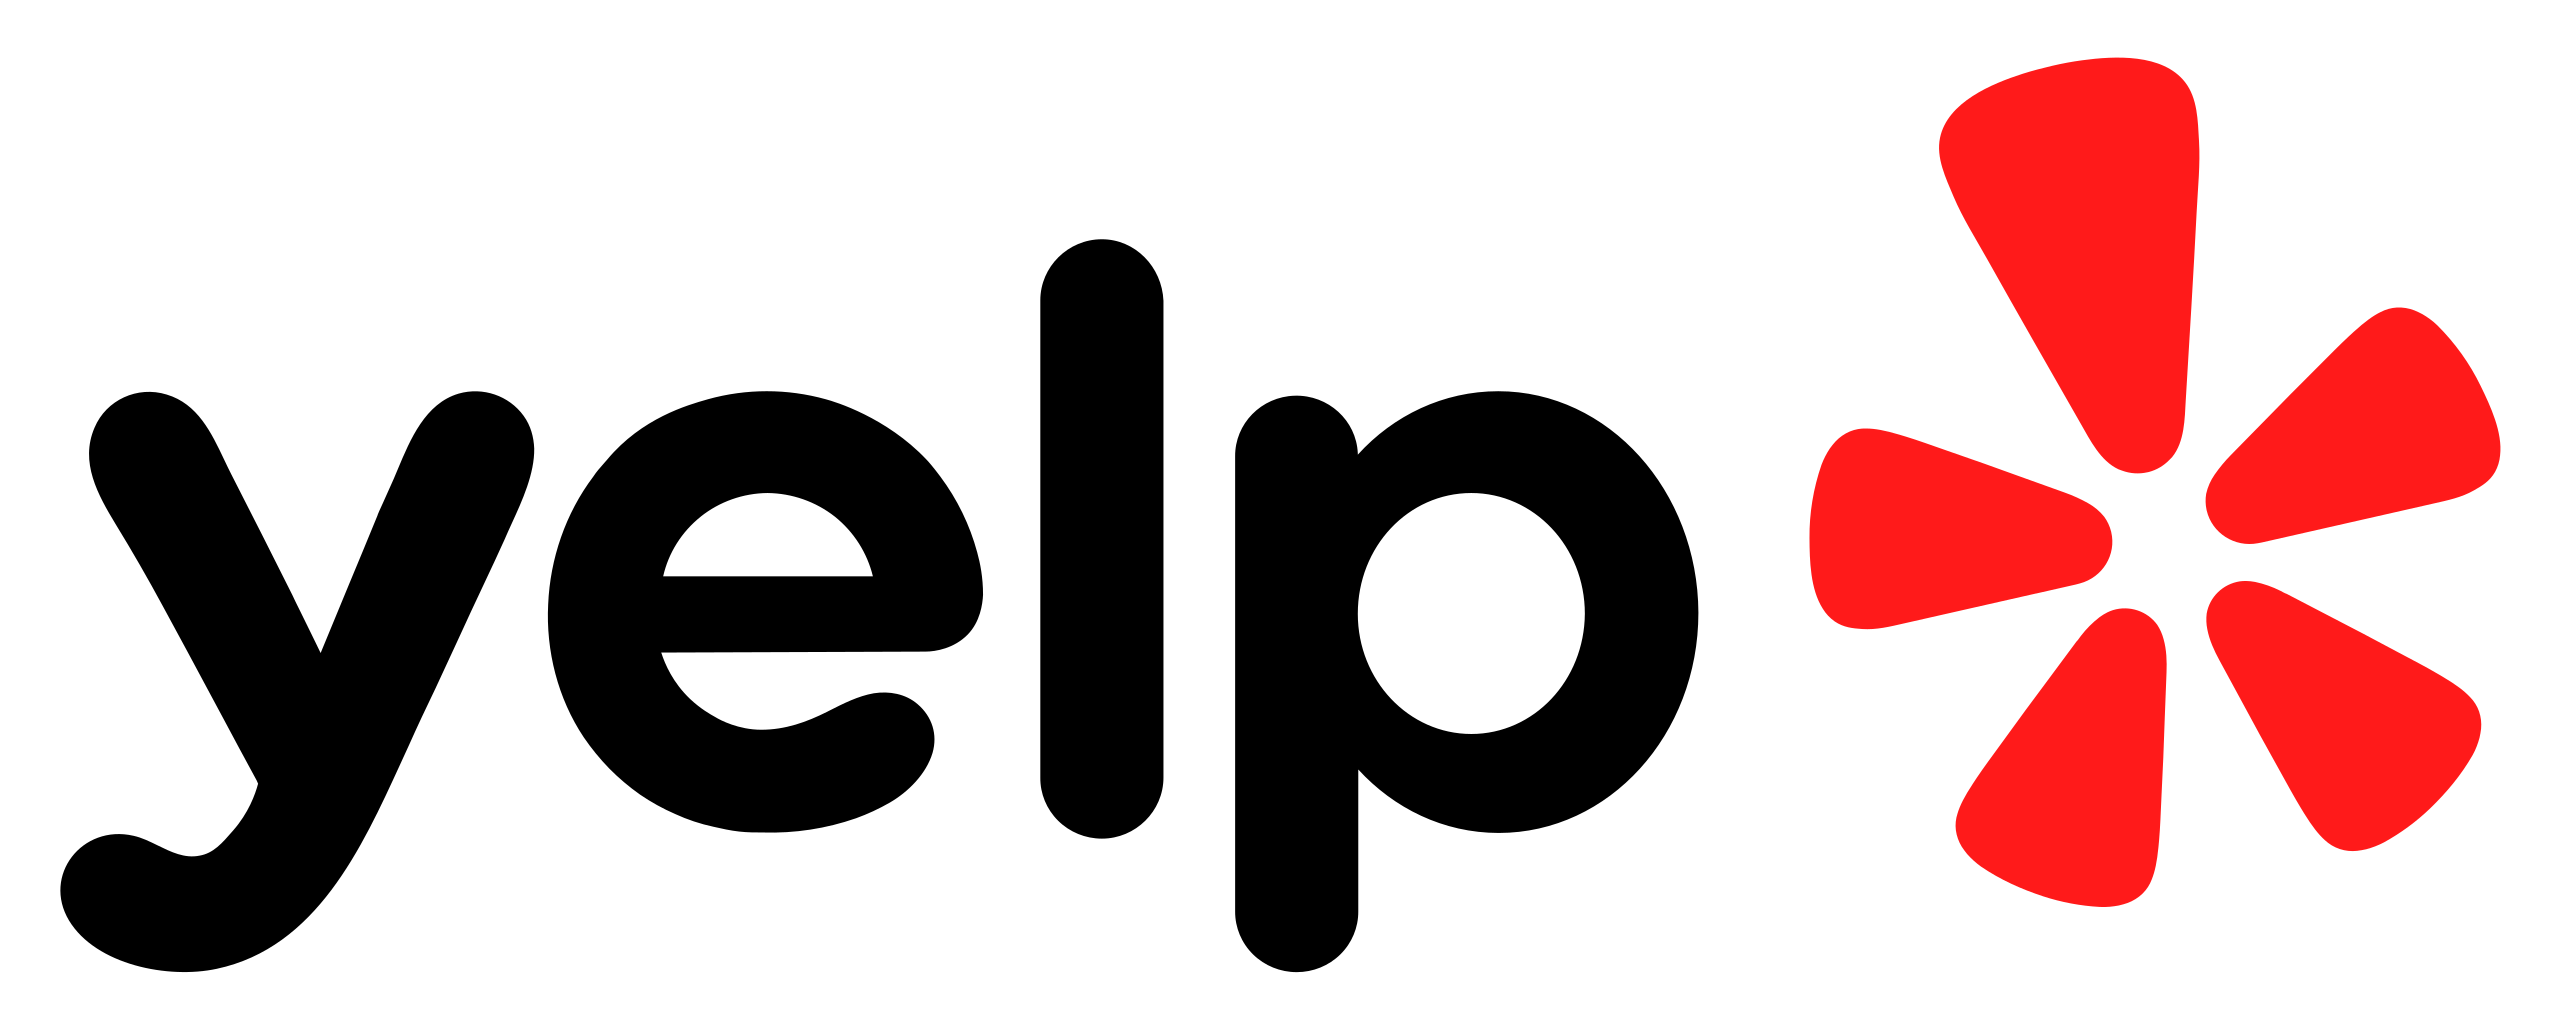 black and white Yelp logo